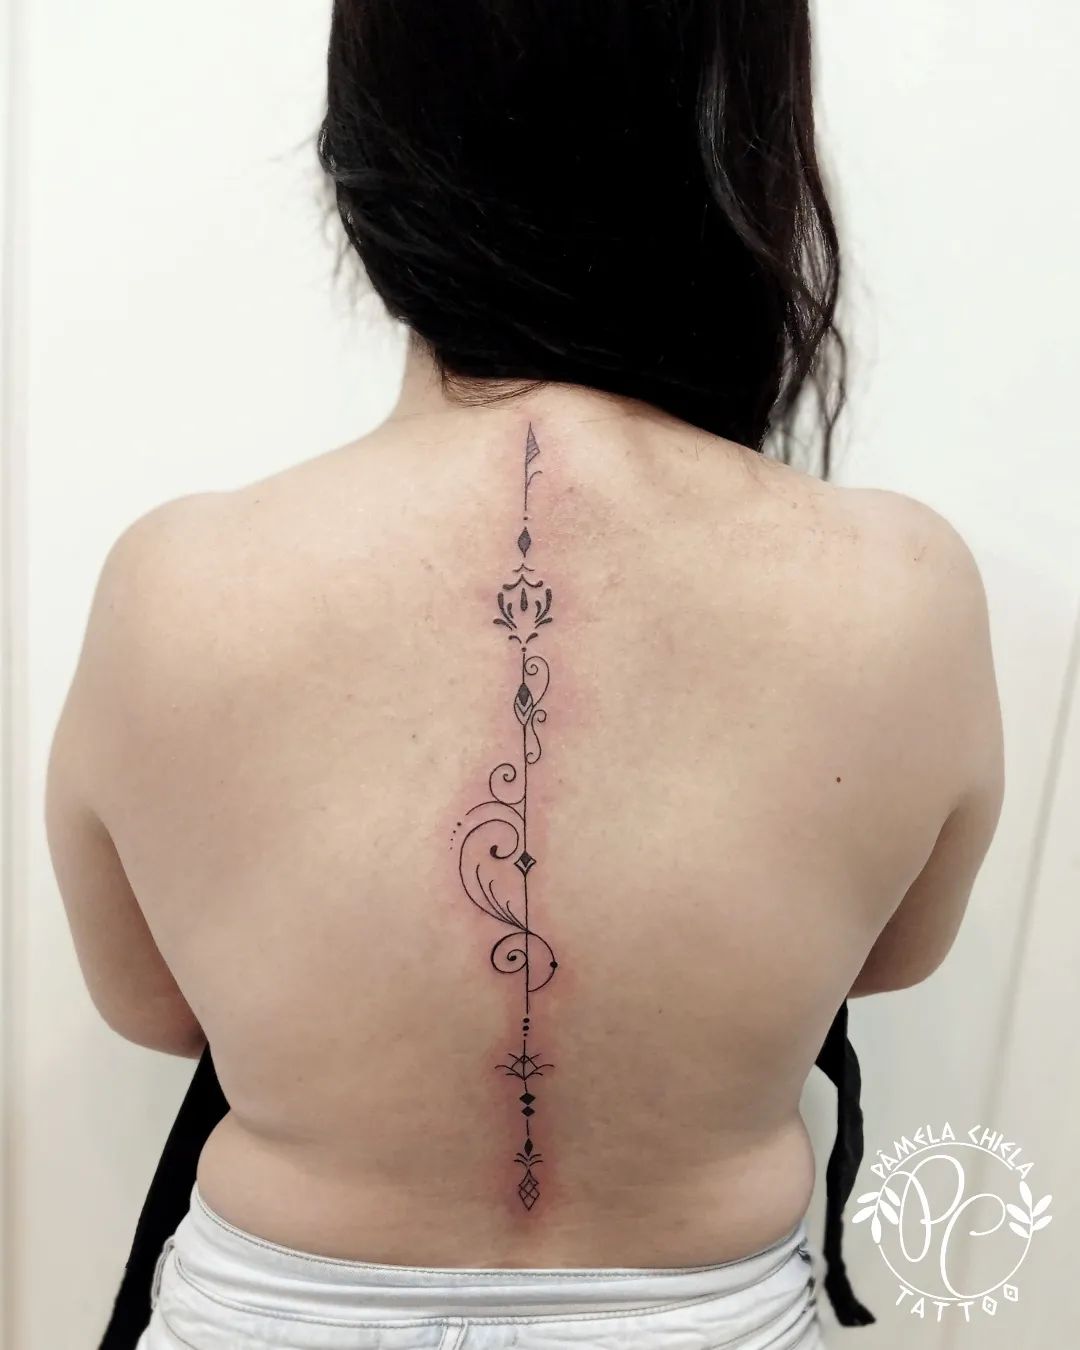 Tatuaje de línea fina en la espalda.